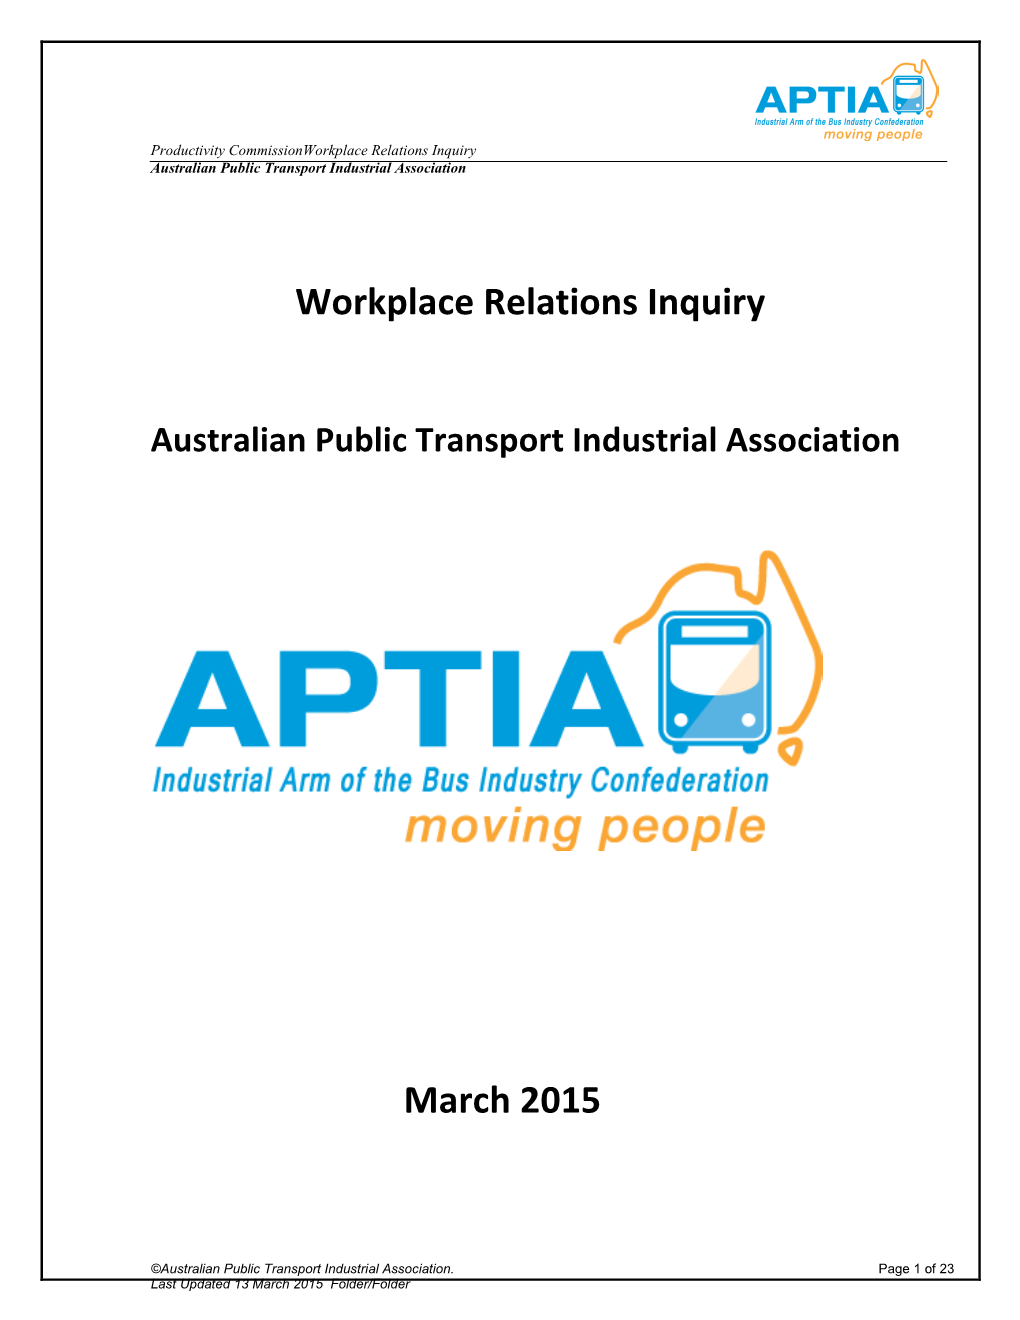 Australian Public Transport Industrial Association